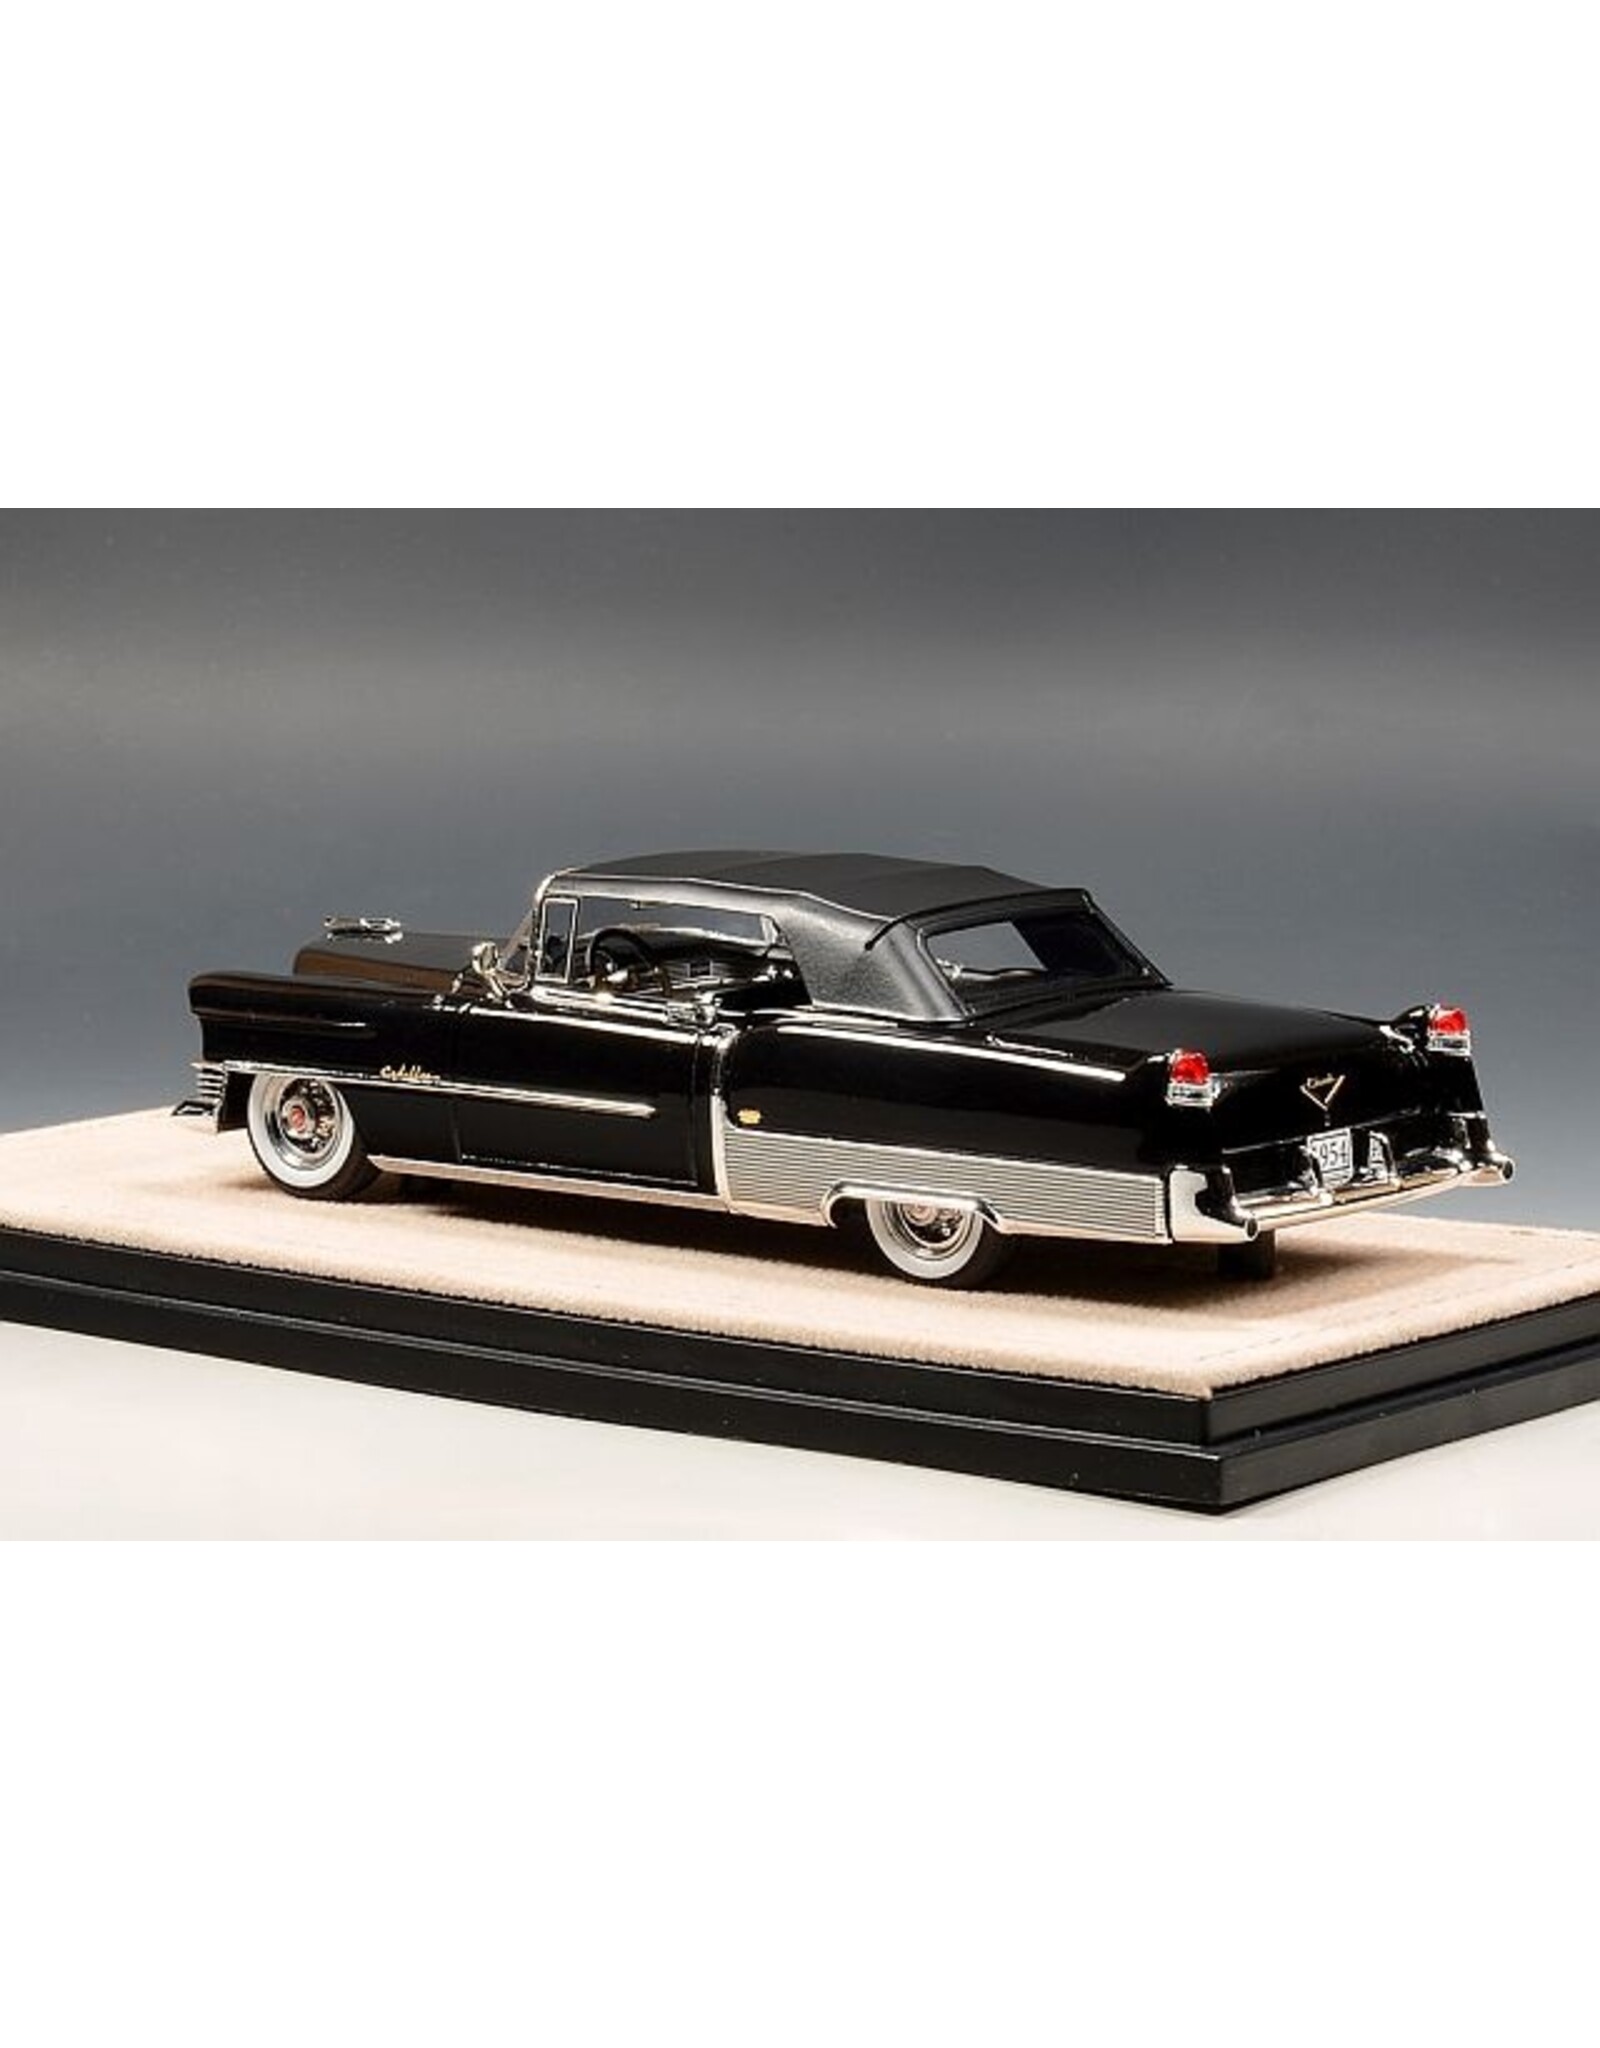 Cadillac(General Motors) Cadillac Eldorado Convertible(1954)closed roof(black)